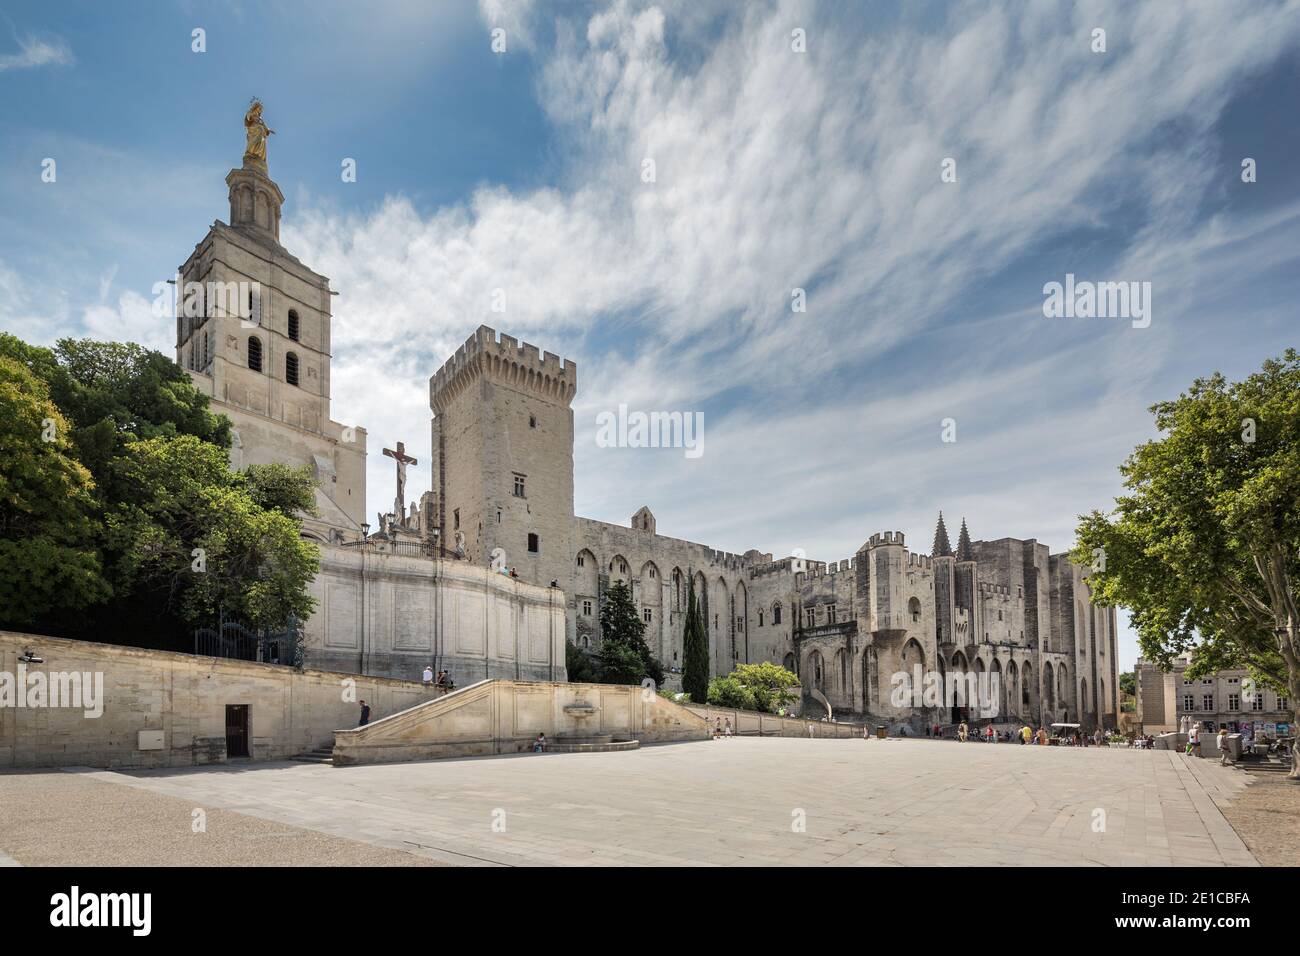 Avignon France July 13th 2015 : The Palais des Papes (Papal palace) in Avignon, Provence, France Stock Photo